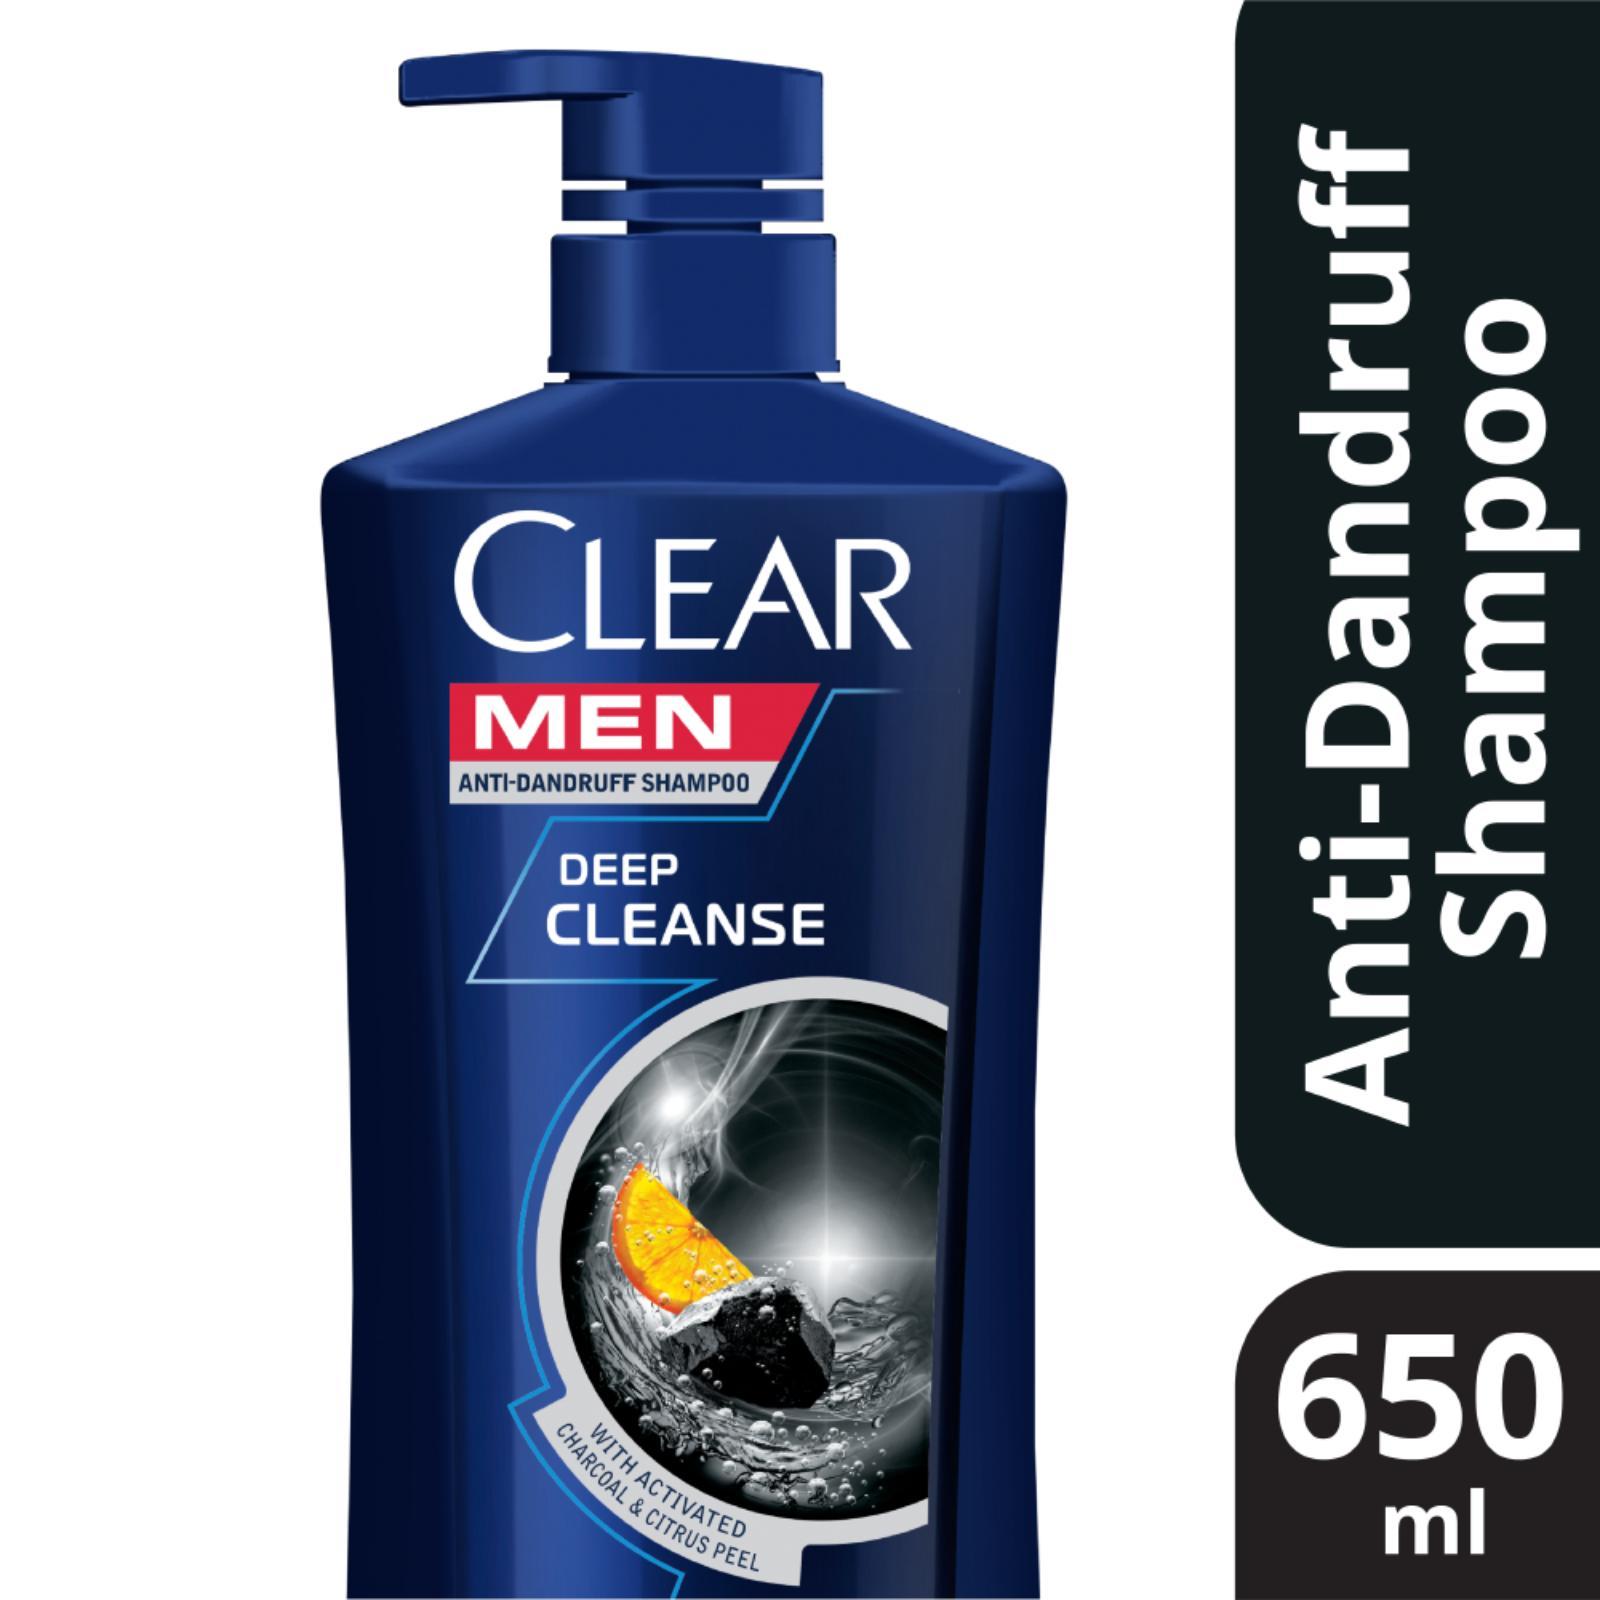 Шампунь 650 мл. Clear Shampoo 650ml. Clear Shampoo 650 мл. Clear шампунь Deep Cleanse 340 ml. Шампунь Clear men нормал 380ml.